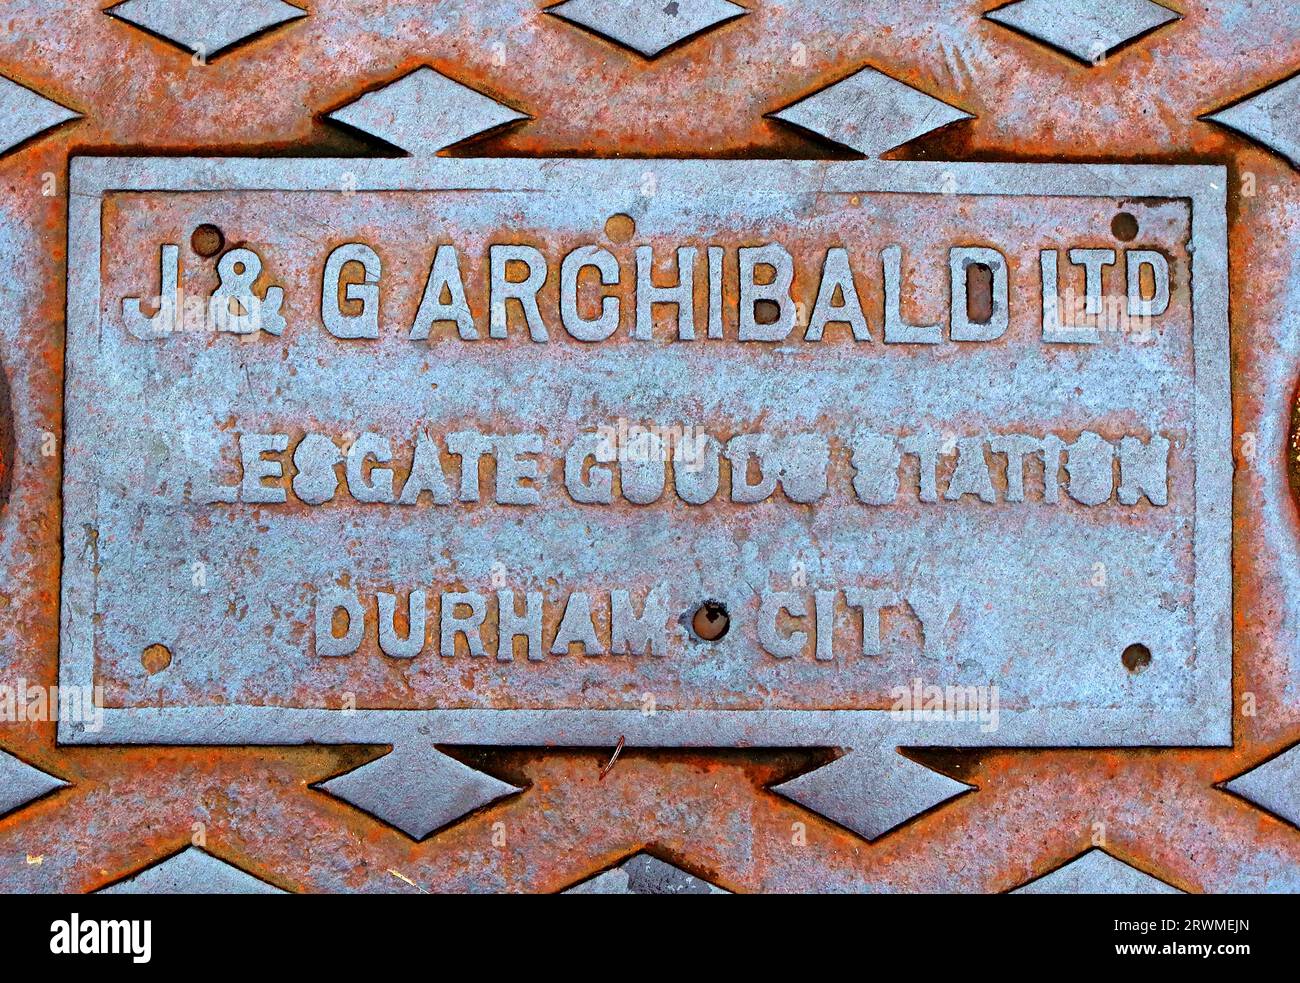 J&G Archibald Ltd GRID, Gilesgate Goods Station, Durham City, Angleterre, Royaume-Uni, DH1 1QG Banque D'Images